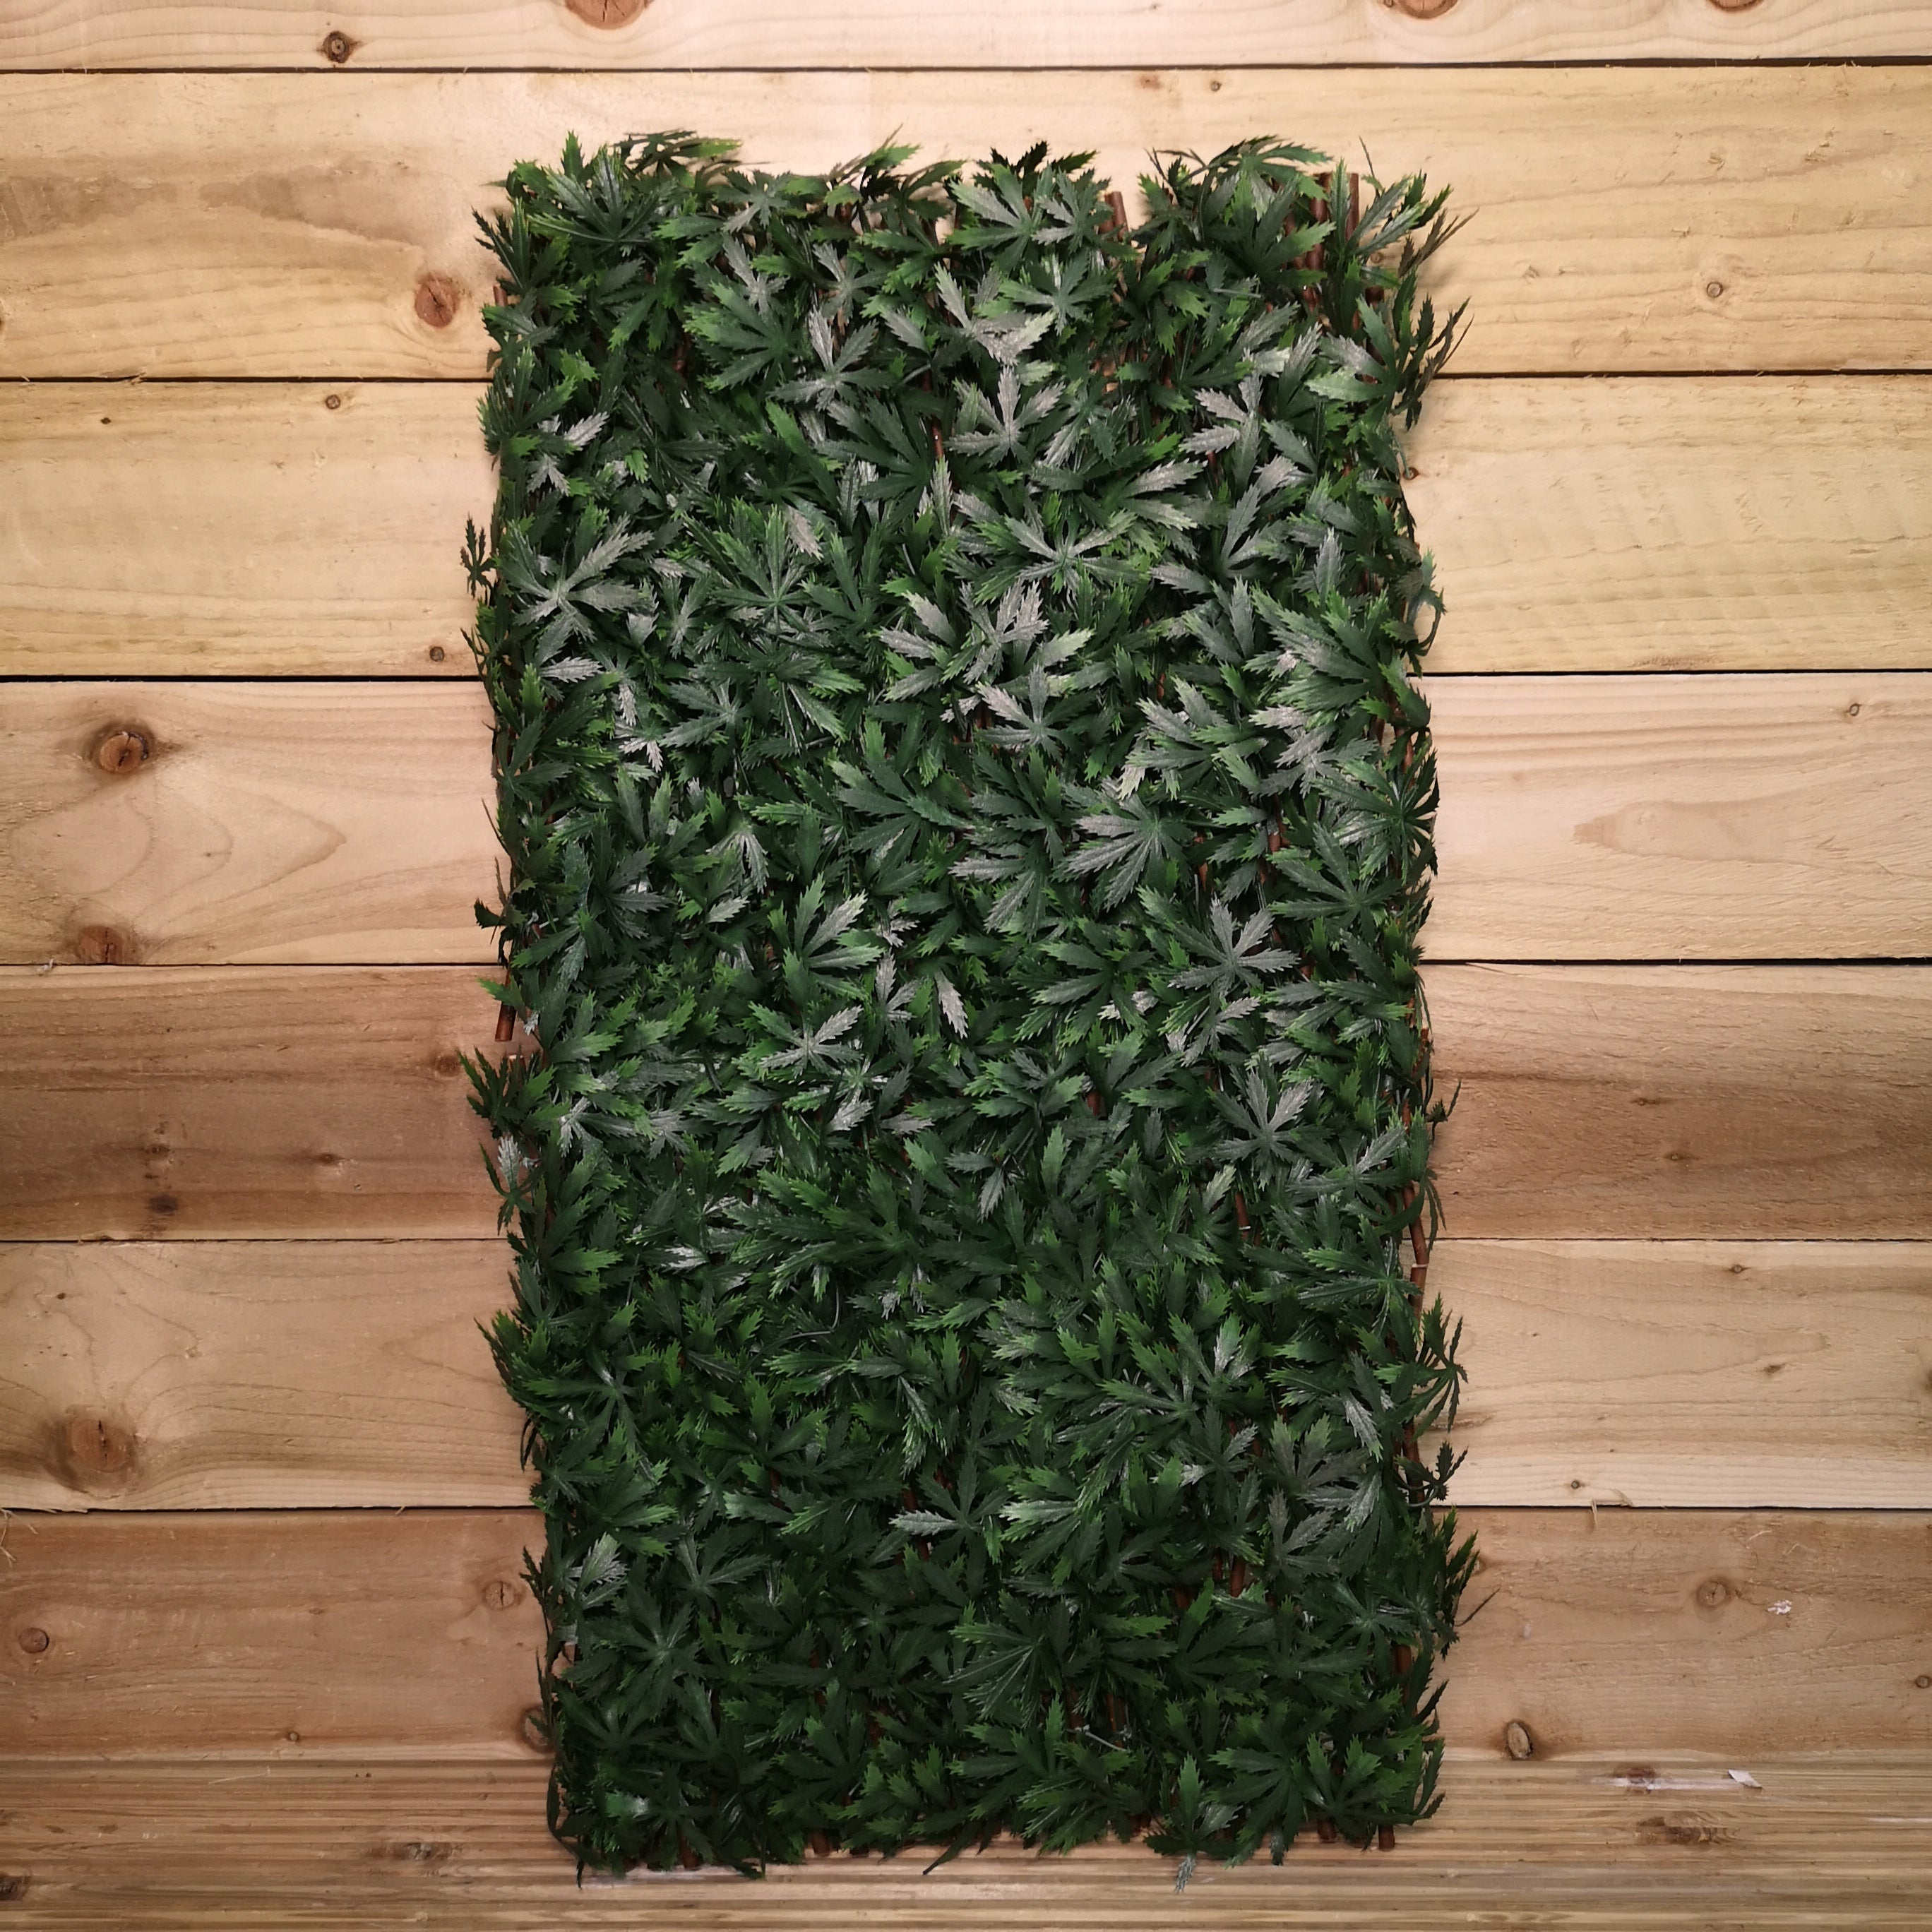 180cm x 60cm Artificial Fence Garden Trellis Privacy Screening Indoor Outdoor Wall Panel - Green Acer